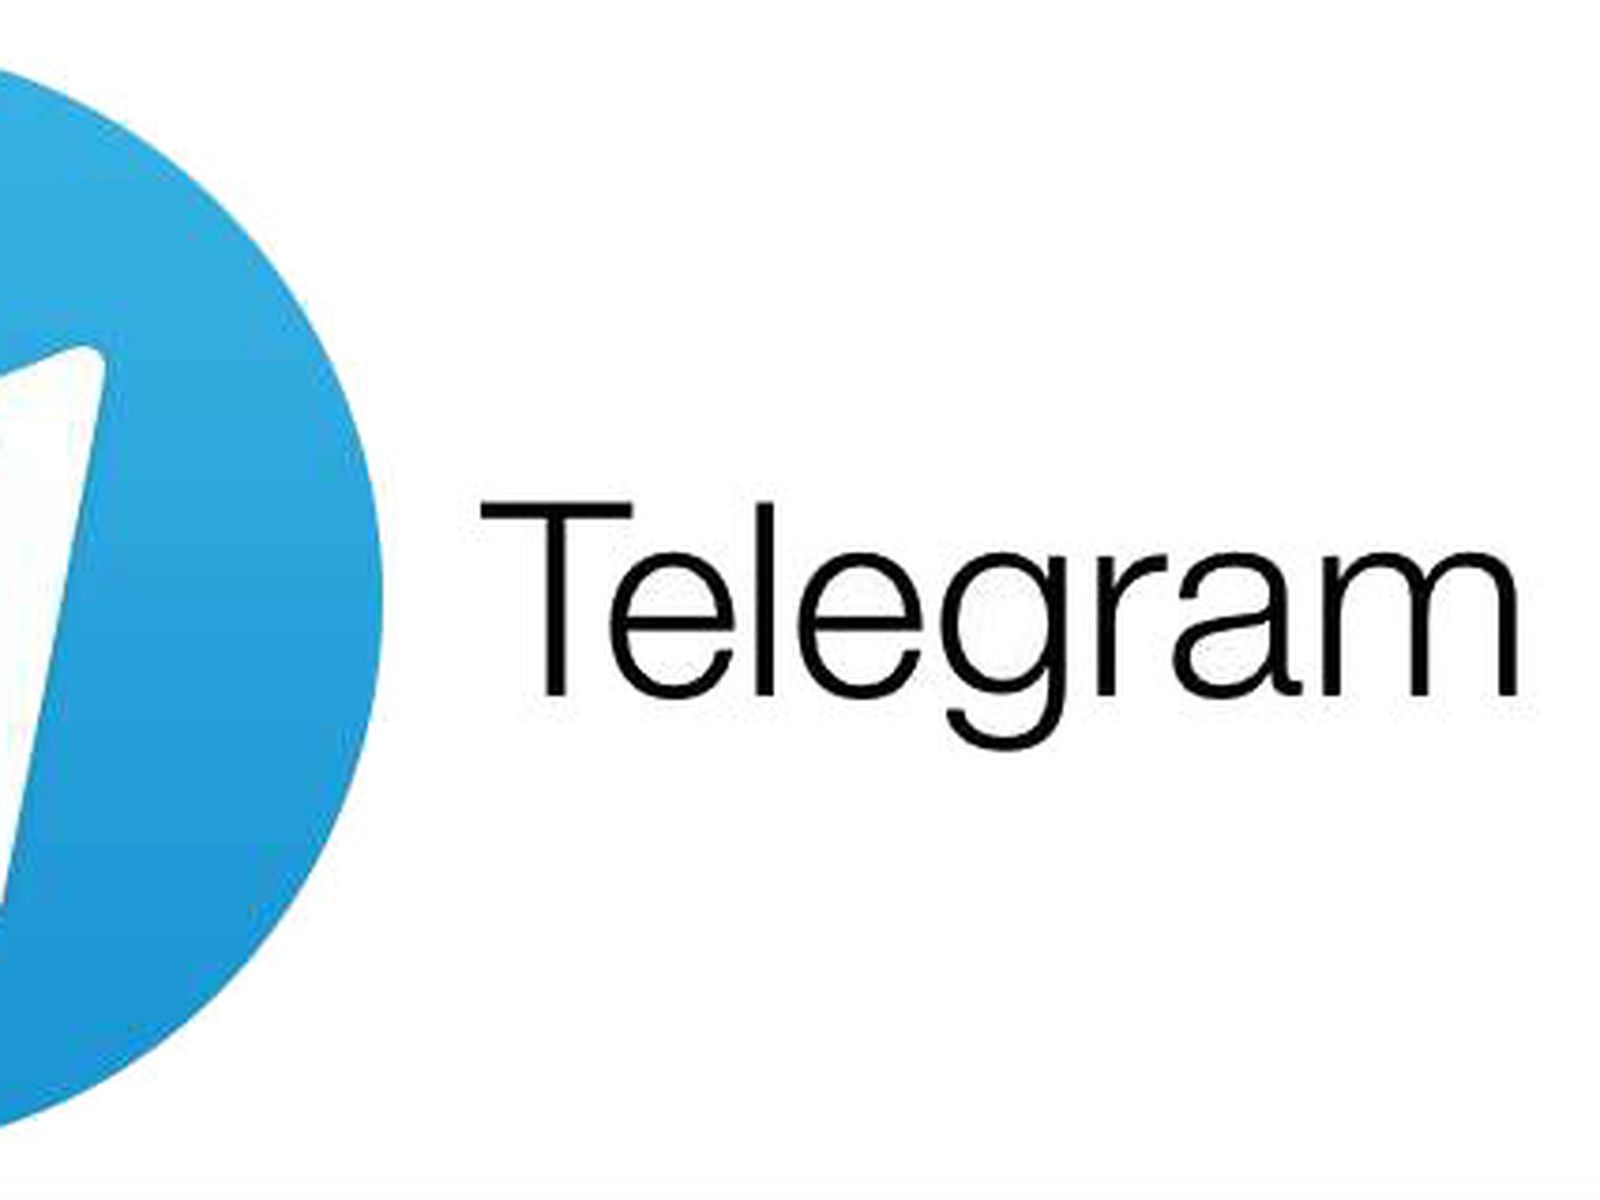 Indecent material led to Telegram App Store removal - Mobile World Live